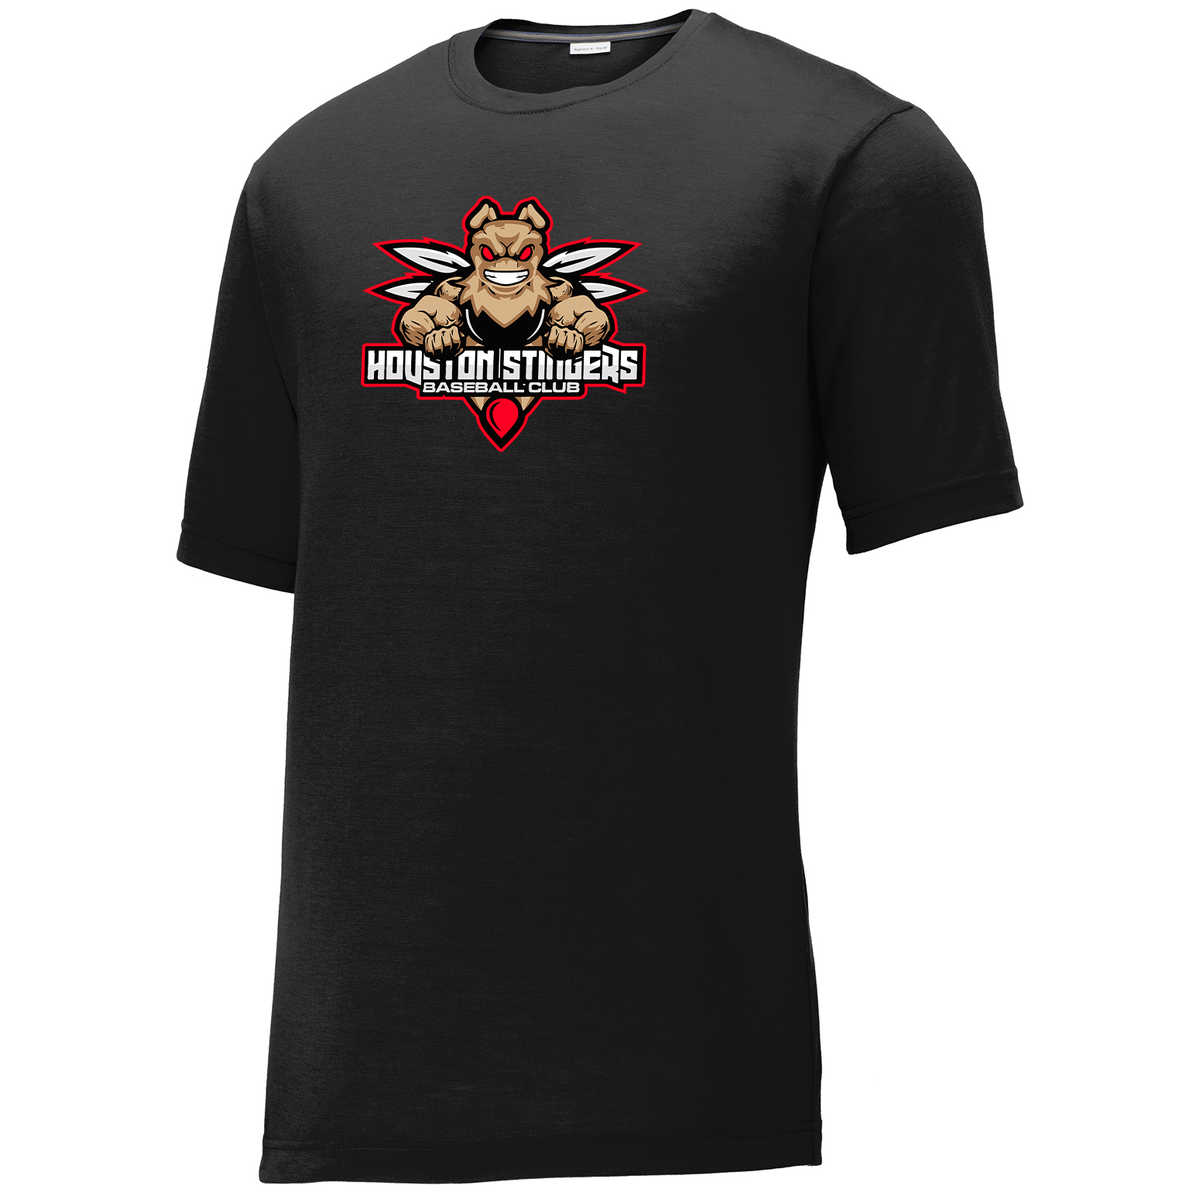 Houston Stingers Baseball Club CottonTouch Performance T-Shirt